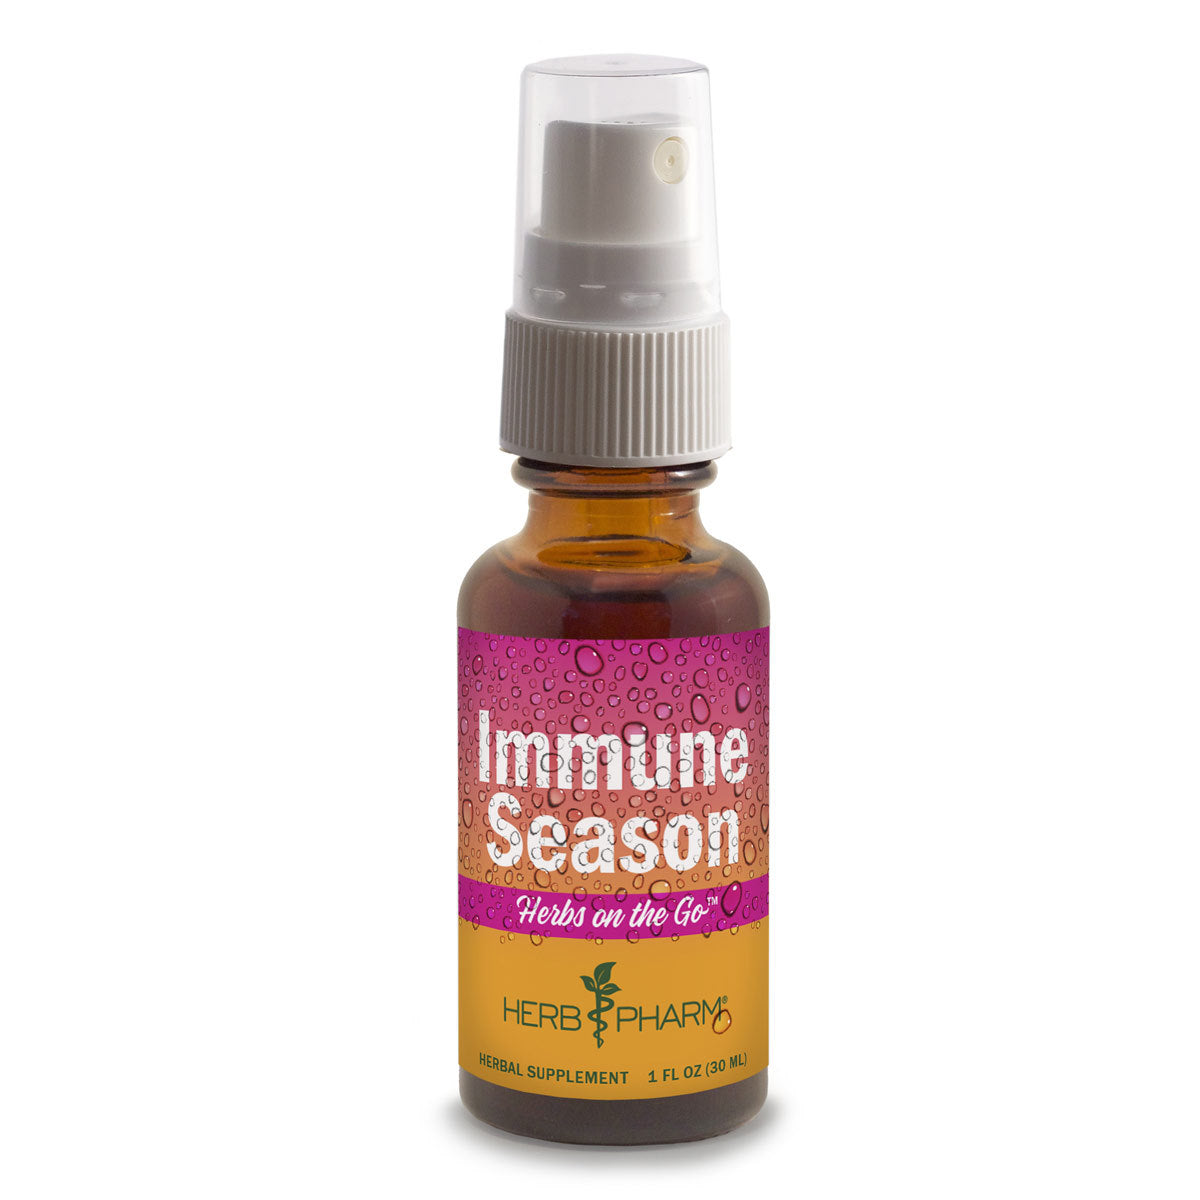 Primary image of Herbs on the Go: Immune Season